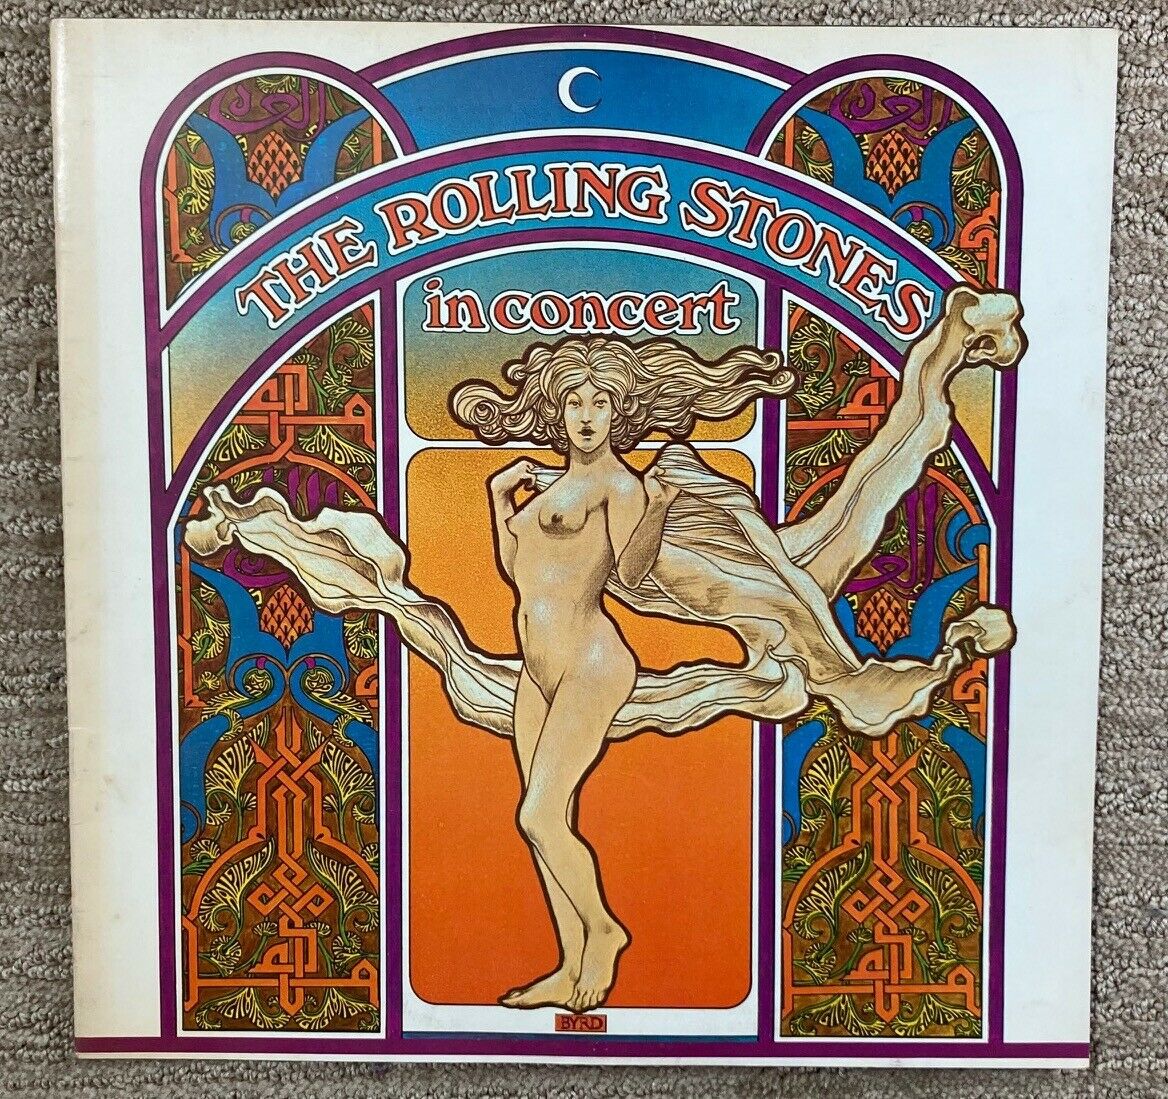 THE ROLLING STONES - 1969 LET IT BLEED TOUR PROGRAM booklet concert book live